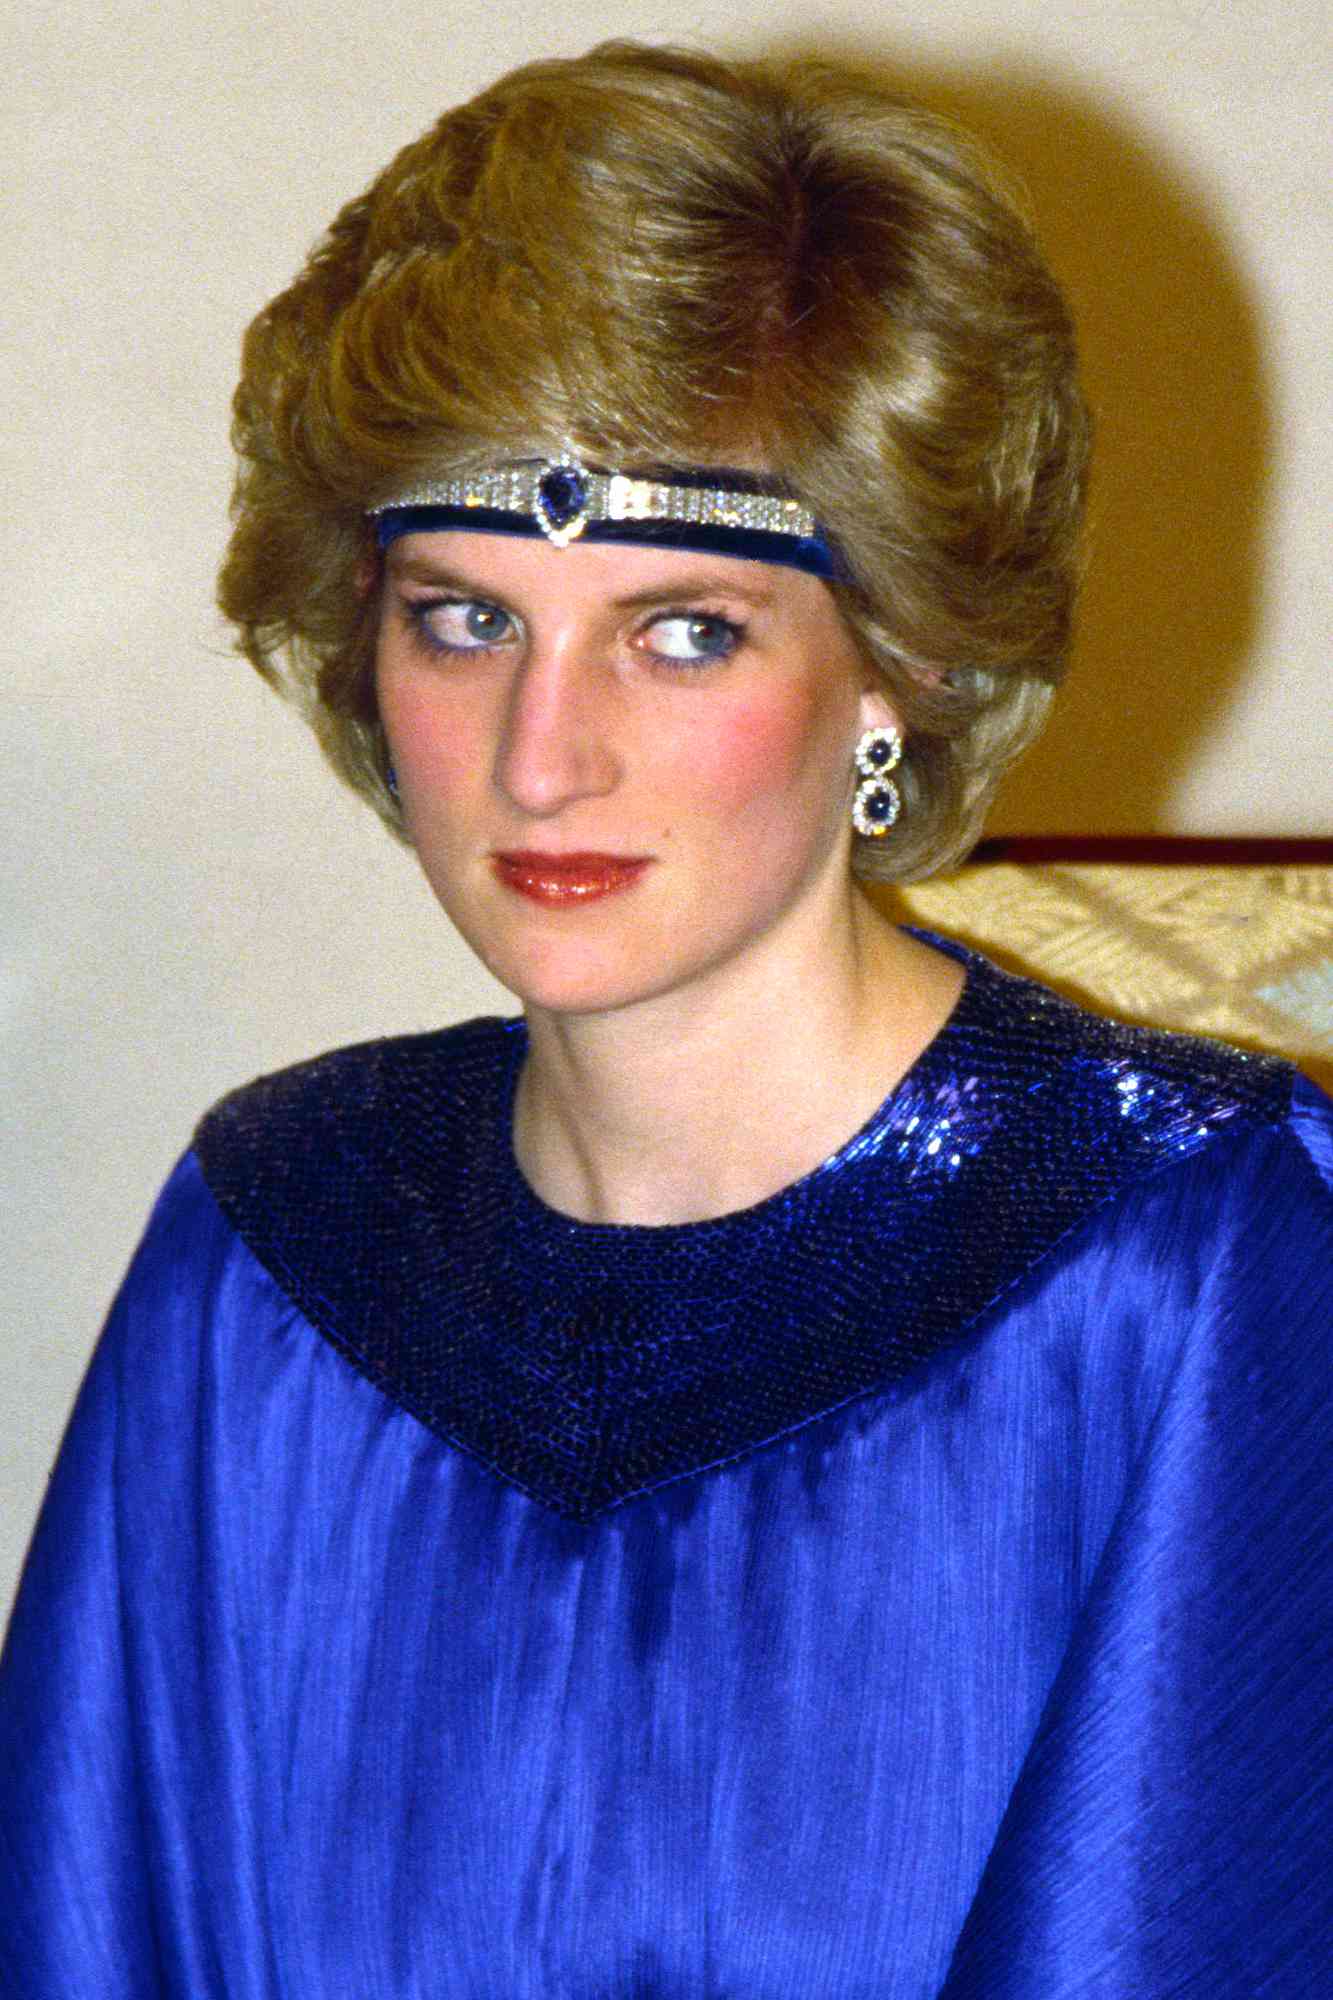 Princess Diana Jewelry Collection | PEOPLE.com